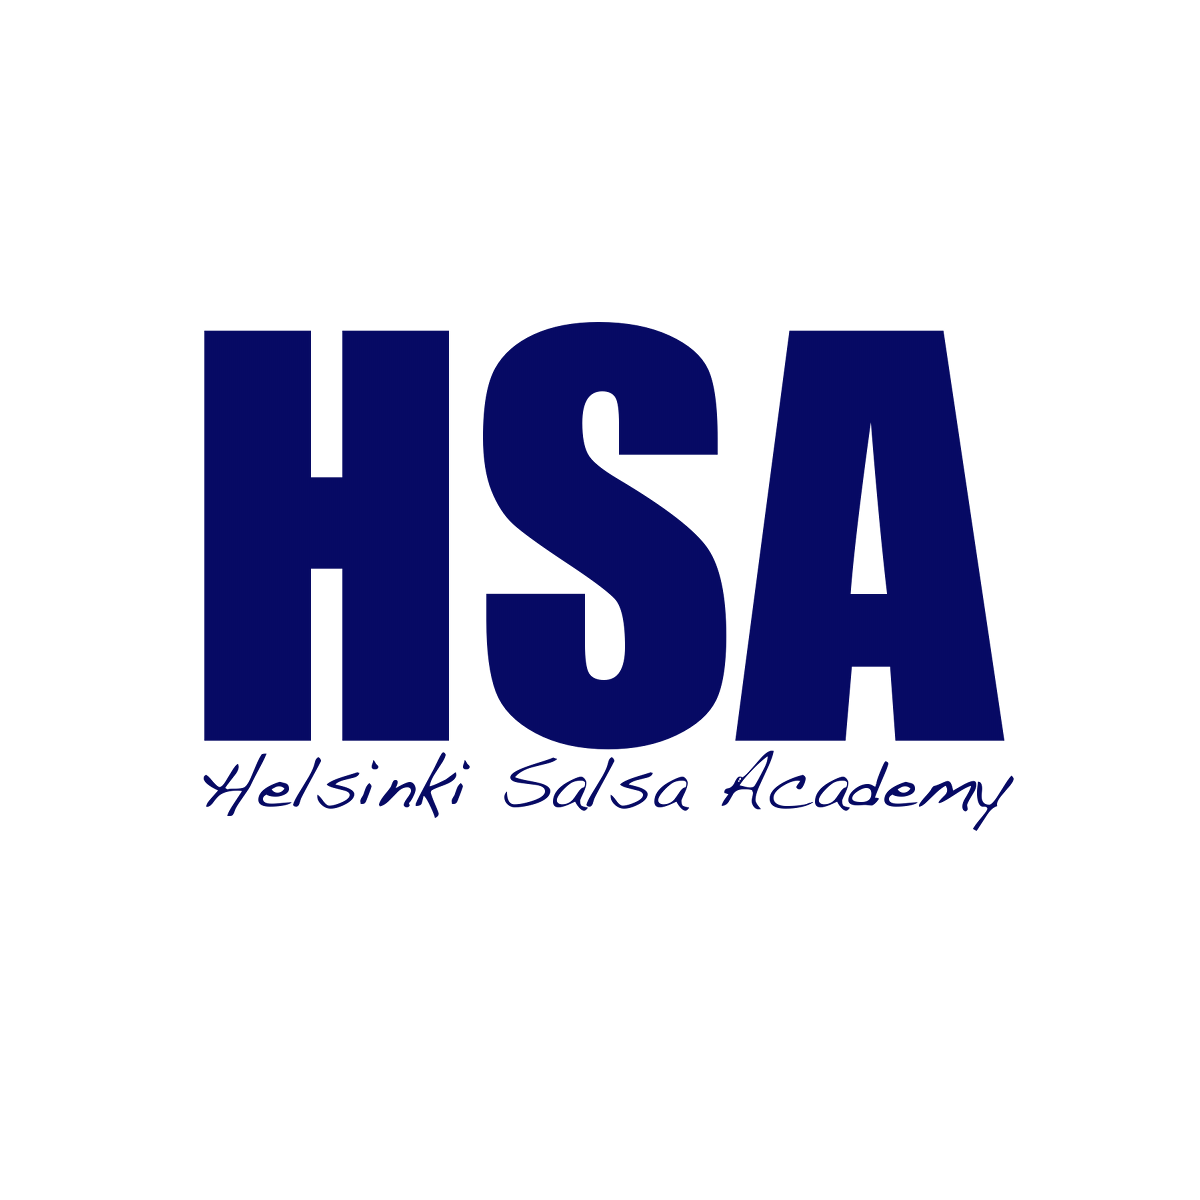 hsa-blue-logo-transparent-background-1200x1200.png